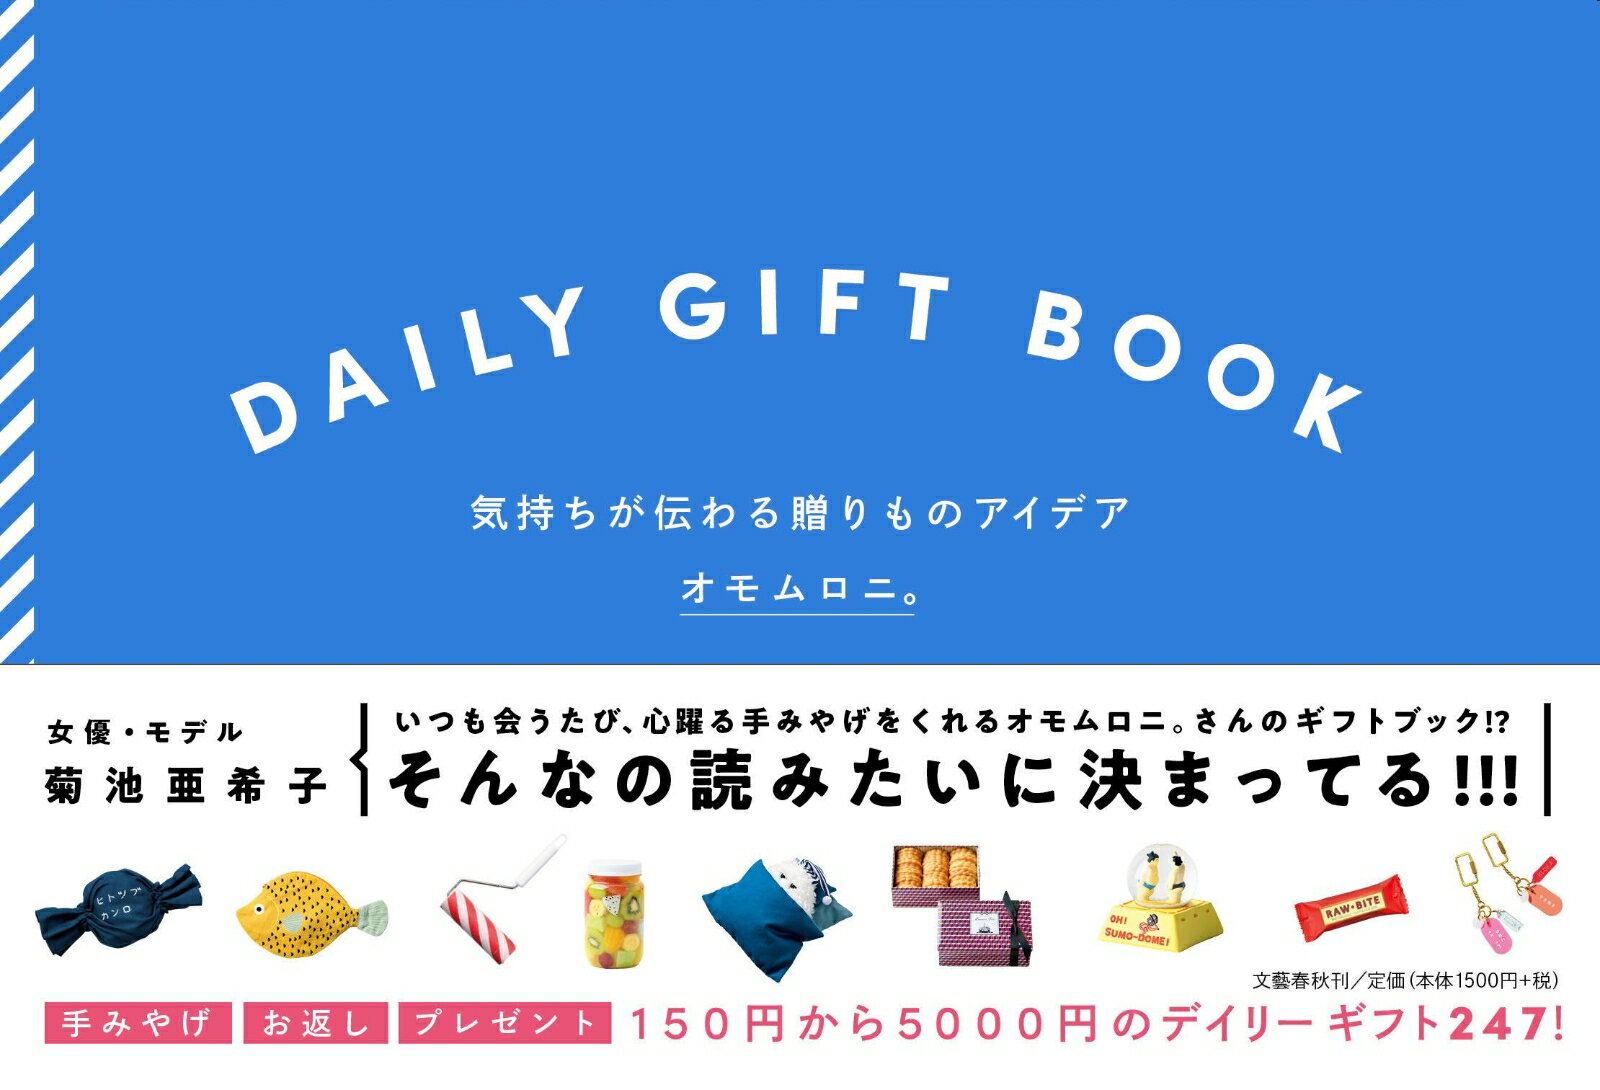 【謝恩価格本】DAILY GIFT BOOK